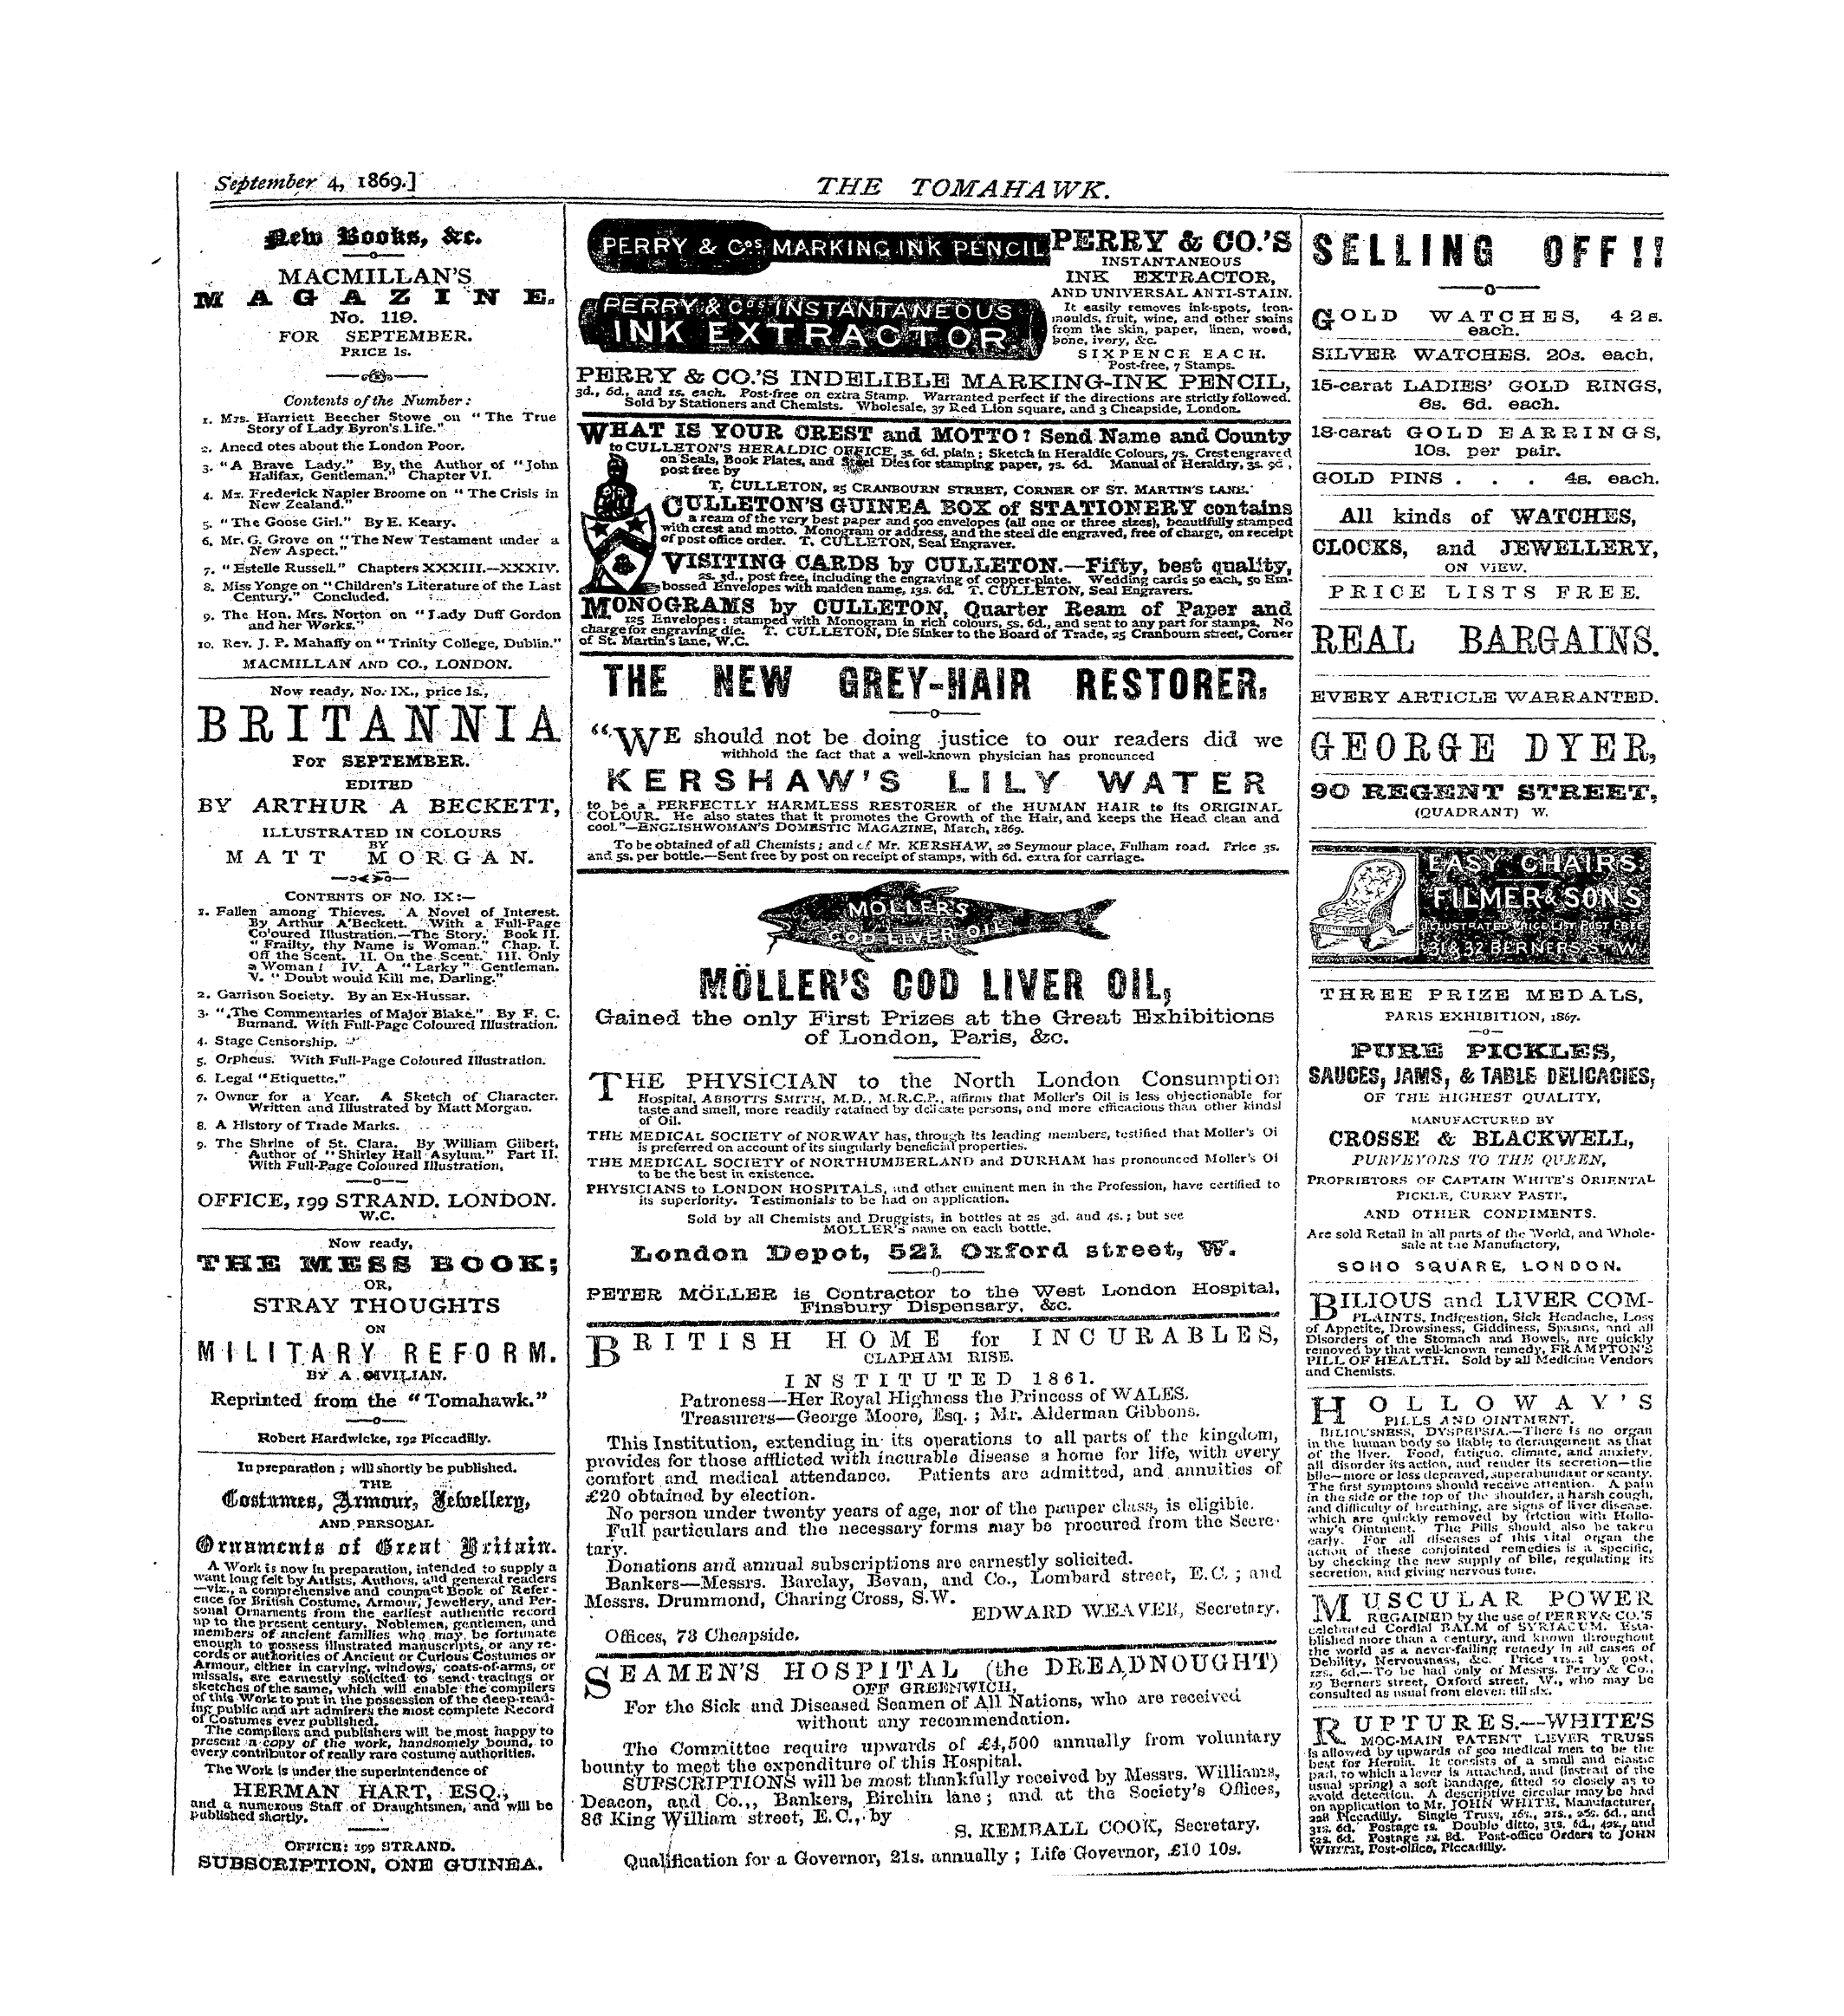 Tomahawk (1867-1870): jS F Y, 1st edition: 15